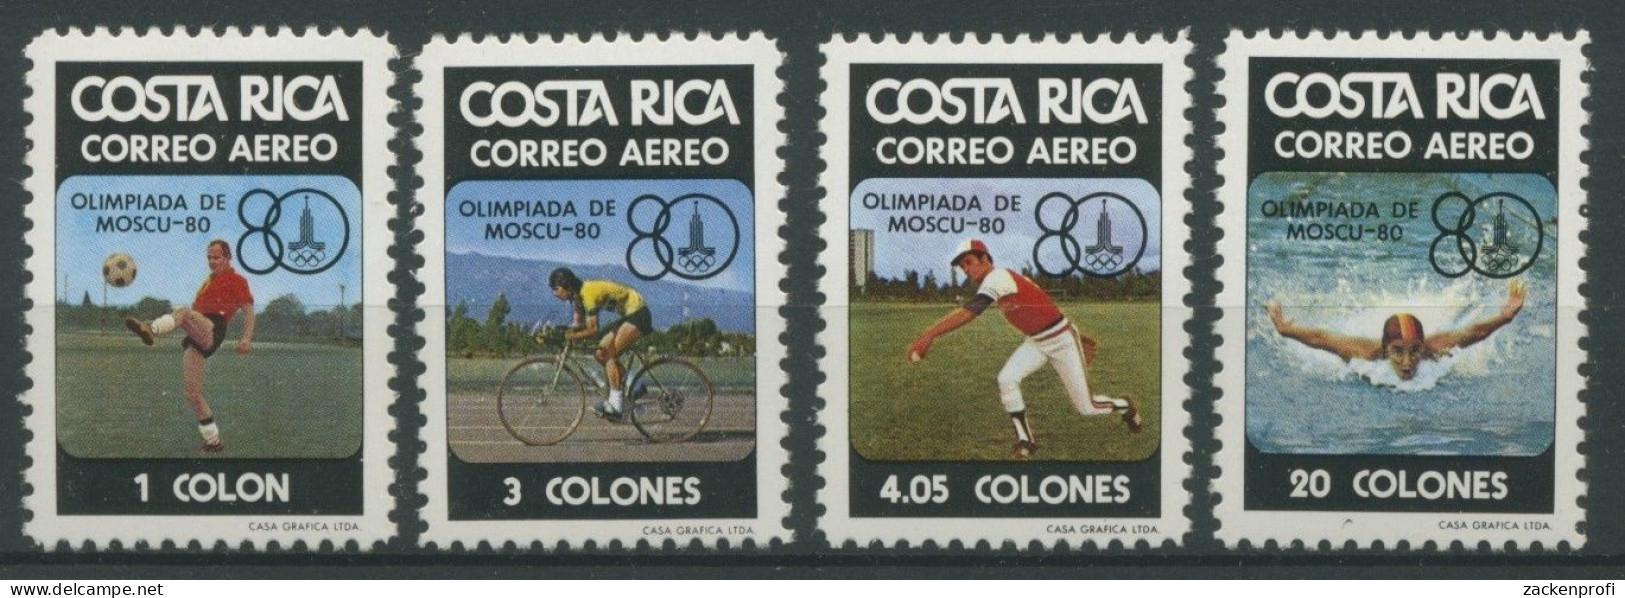 Costa Rica 1980 Olympiade Moskau: Baseball Radfahren Fussball 1065/68 Postfrisch - Costa Rica